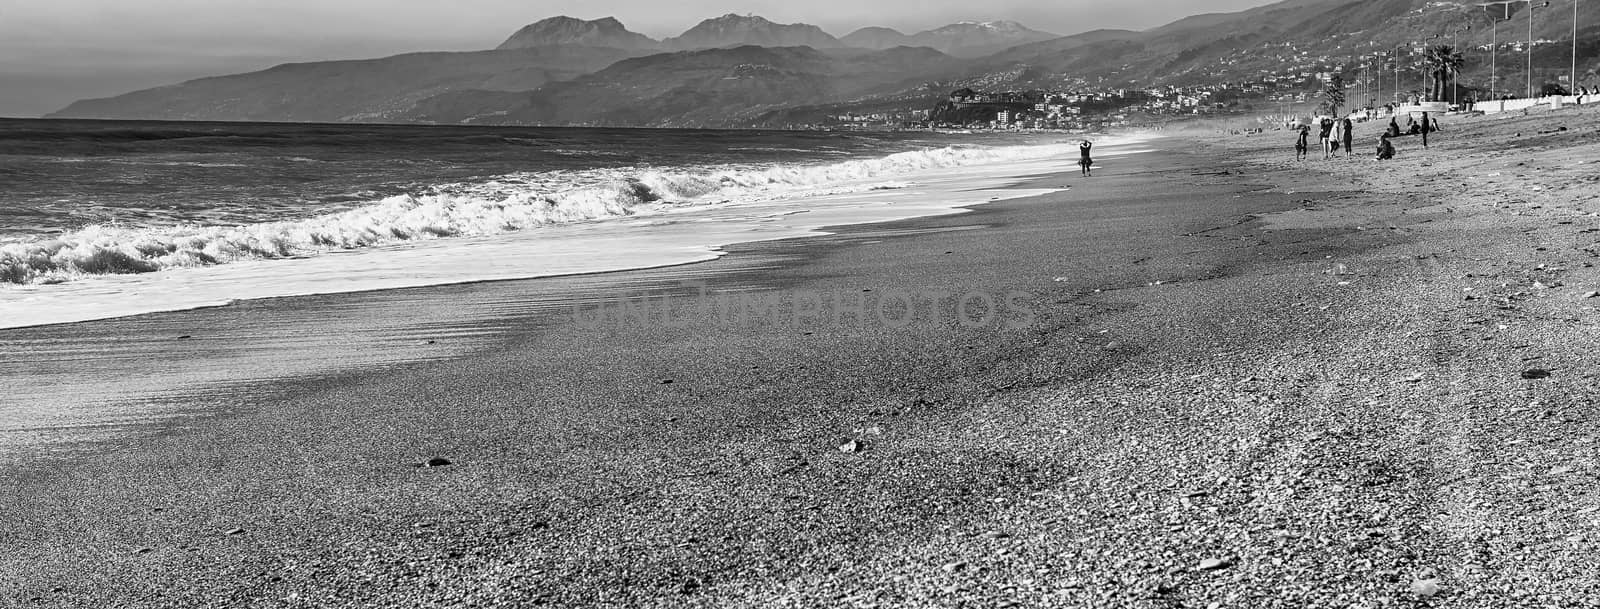 Scenic beach on the thyrrenian coastline in Calabria, Italy by marcorubino